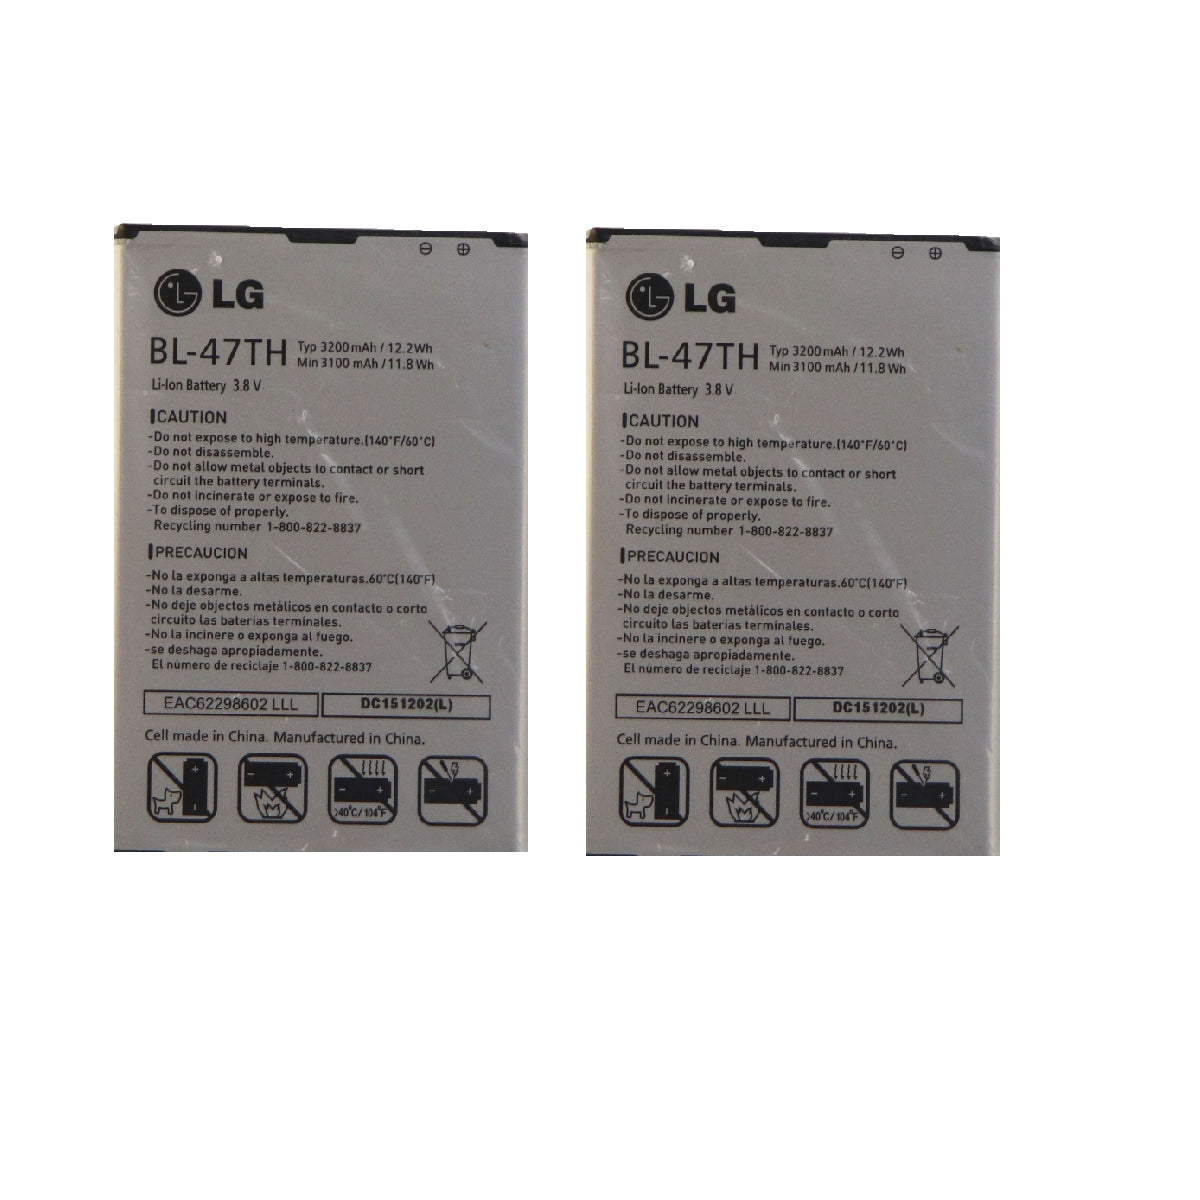 KIT 2x LG BL-47TH Li-ion Battery 3200mAh for Optimus G Pro Cell Phone - Batteries LG    - Simple Cell Bulk Wholesale Pricing - USA Seller